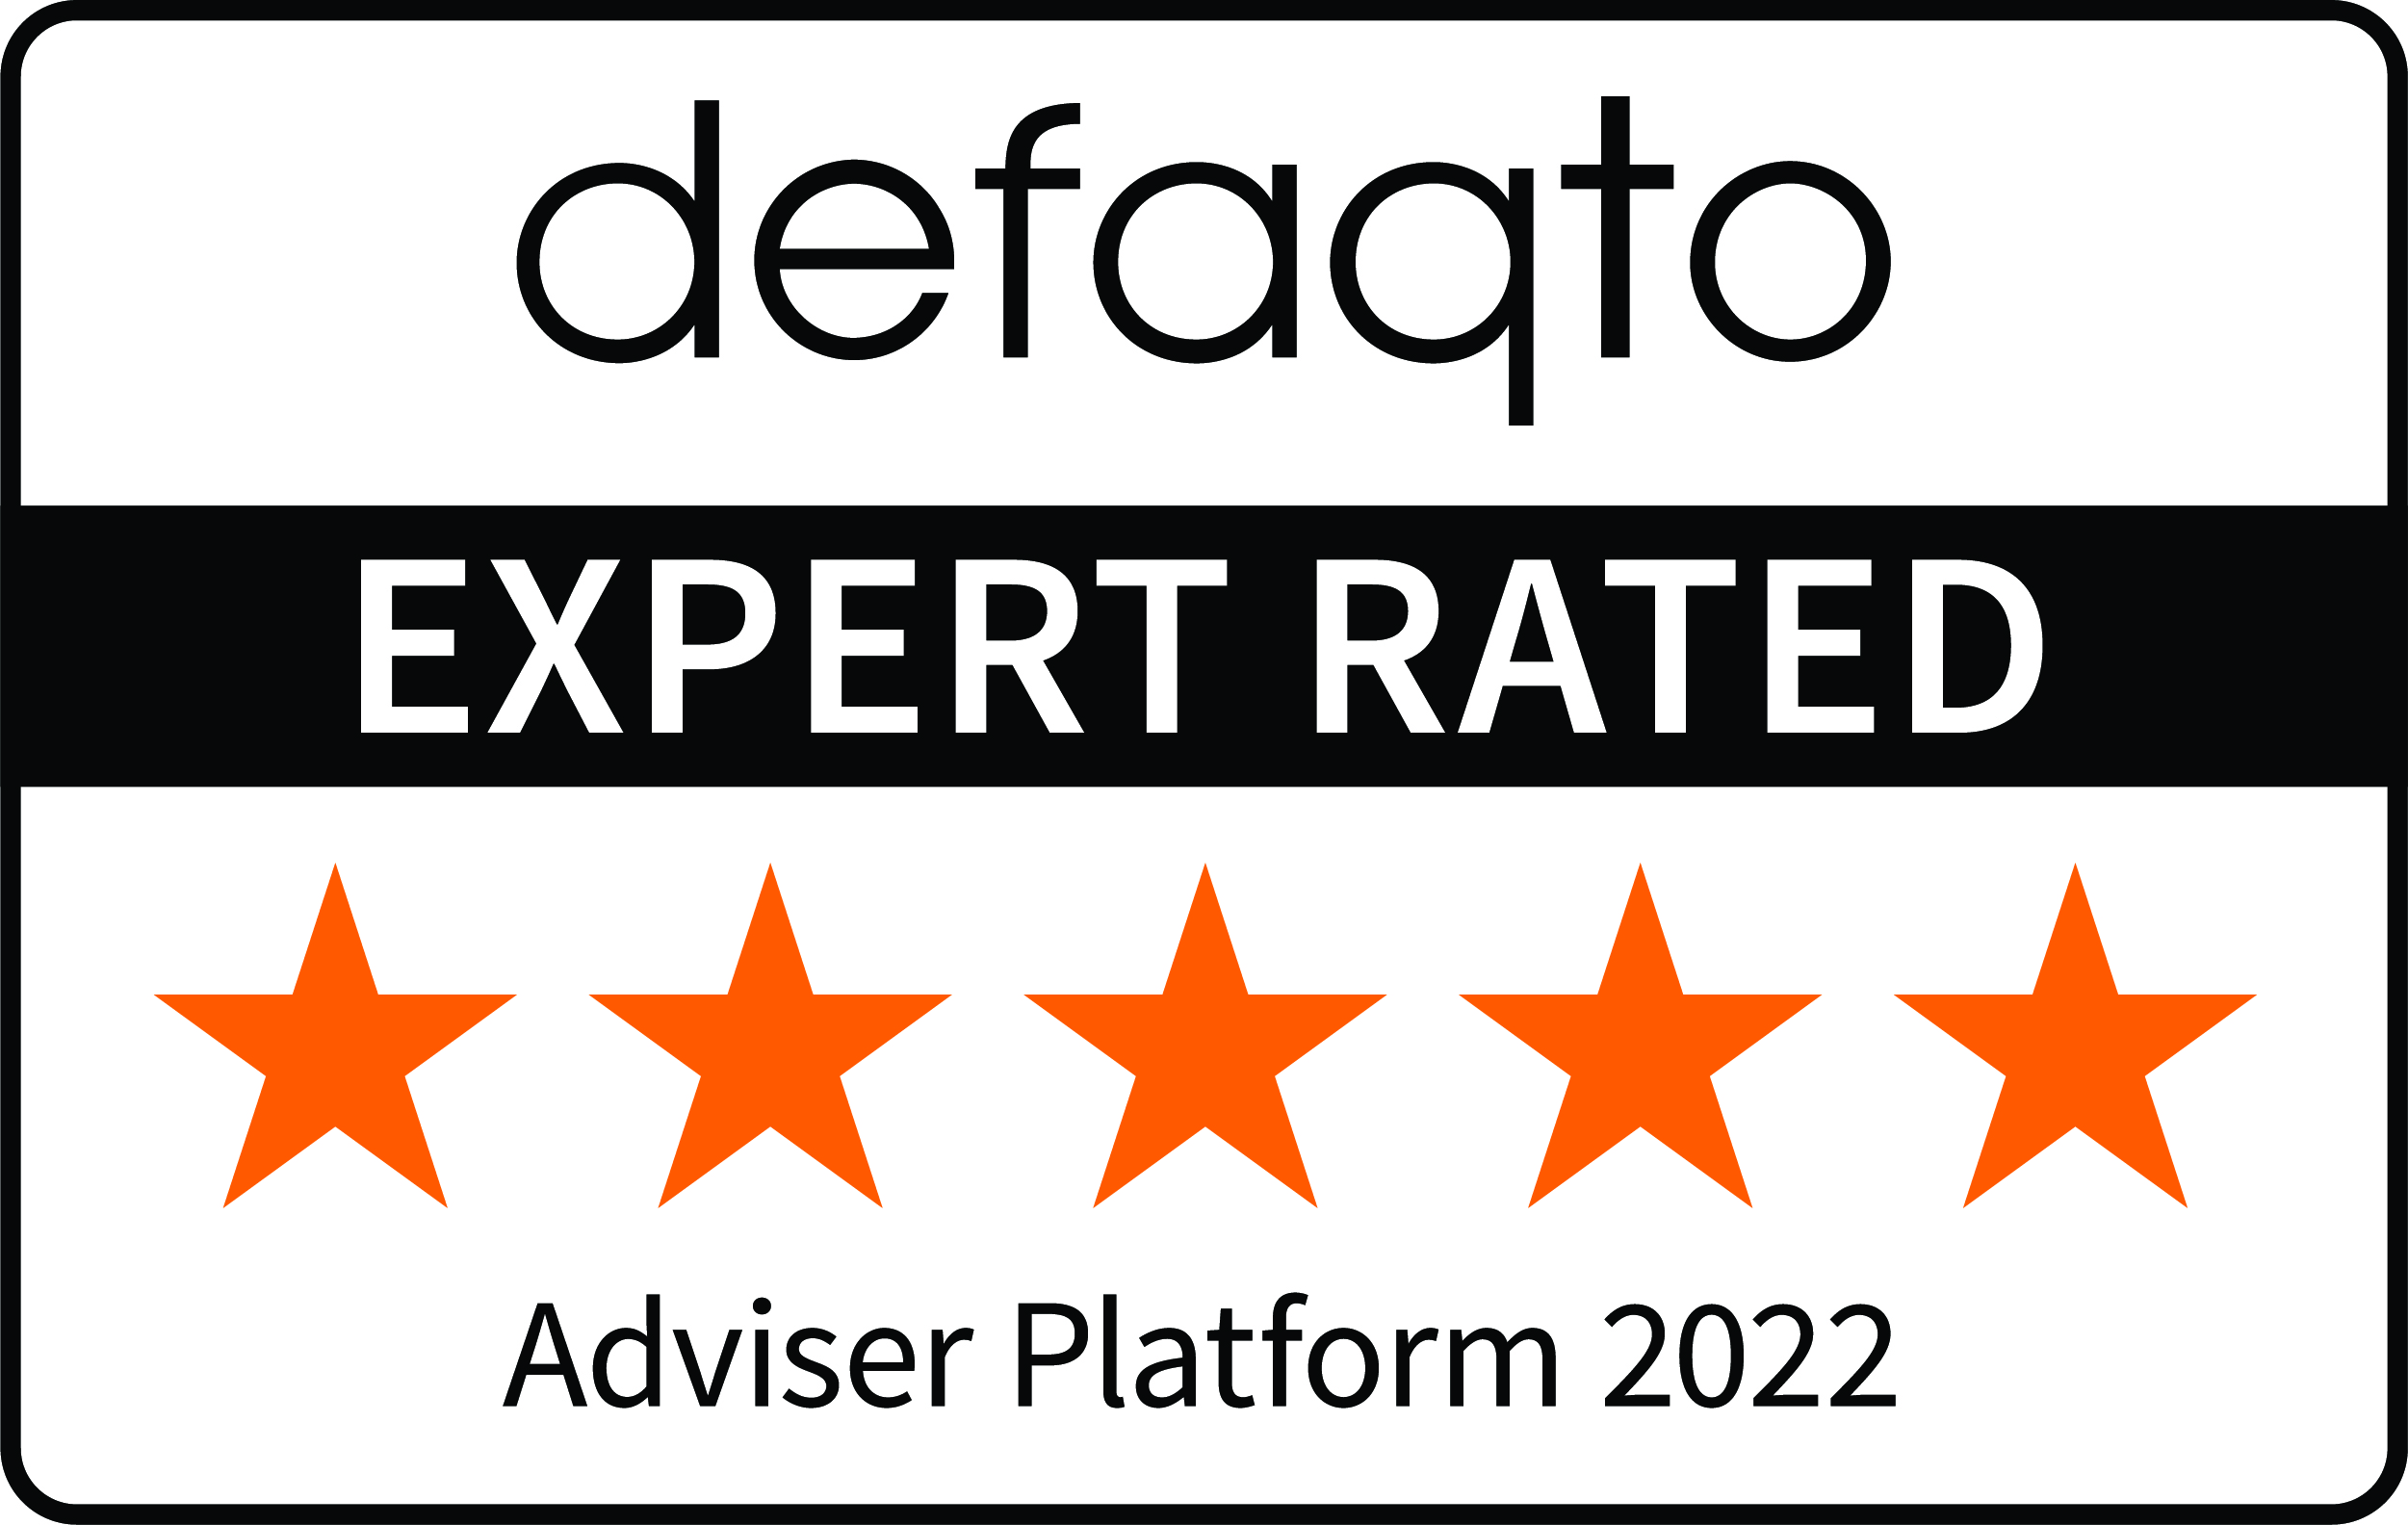 defaqto expert rated 2022